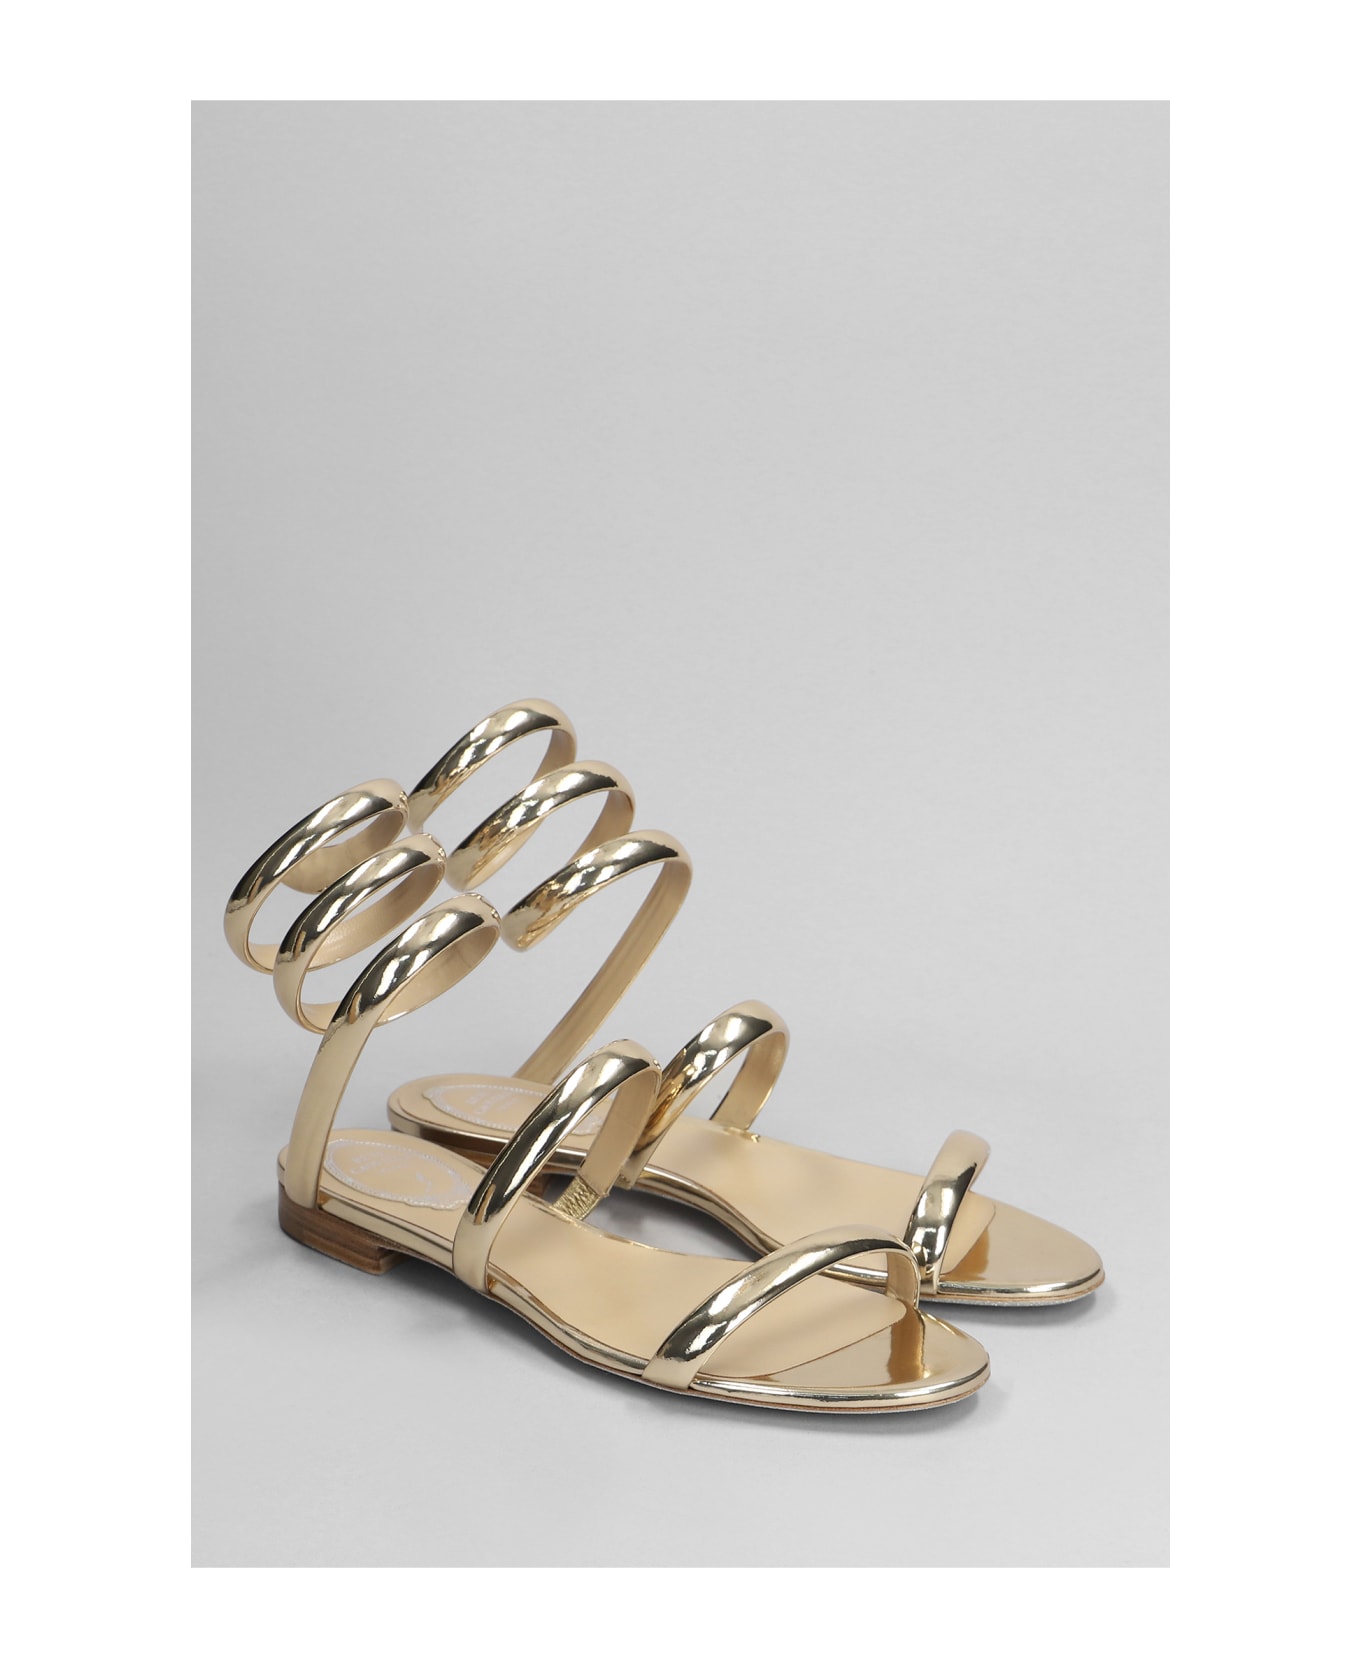 René Caovilla Serpente Sandals In Gold Leather - Gold